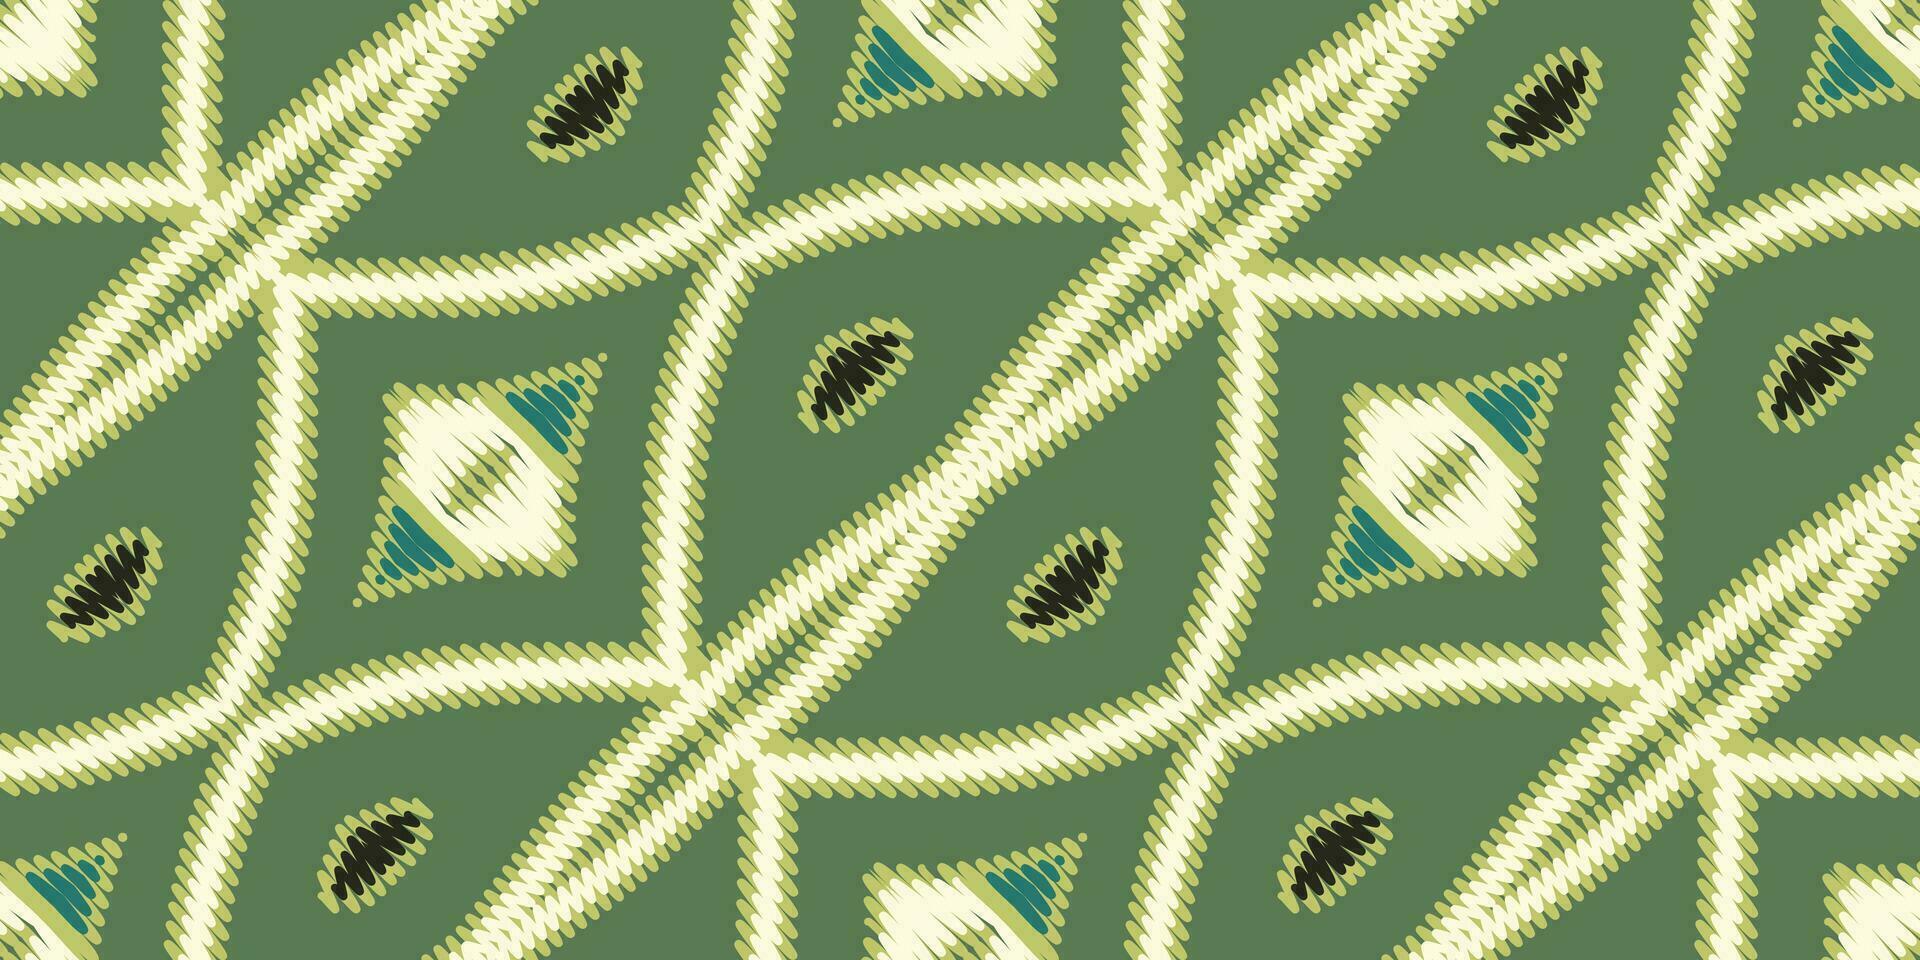 nordic patroon naadloos mughal architectuur motief borduurwerk, ikat borduurwerk vector ontwerp voor afdrukken kant patroon Turks keramisch oude Egypte kunst jacquard patroon